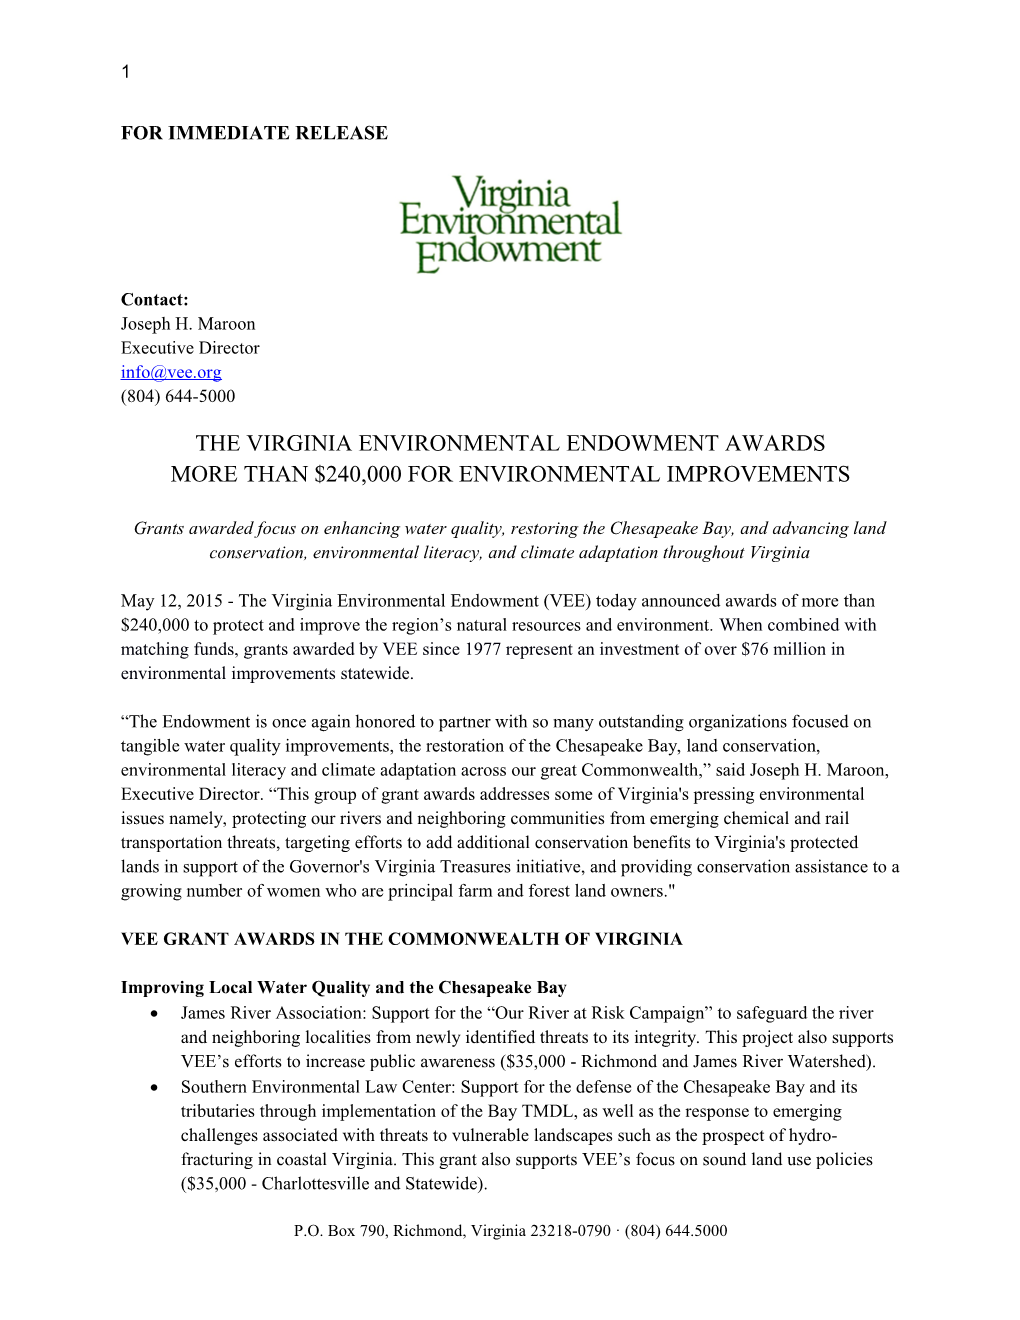 VEE Grantees Press Release May 2014